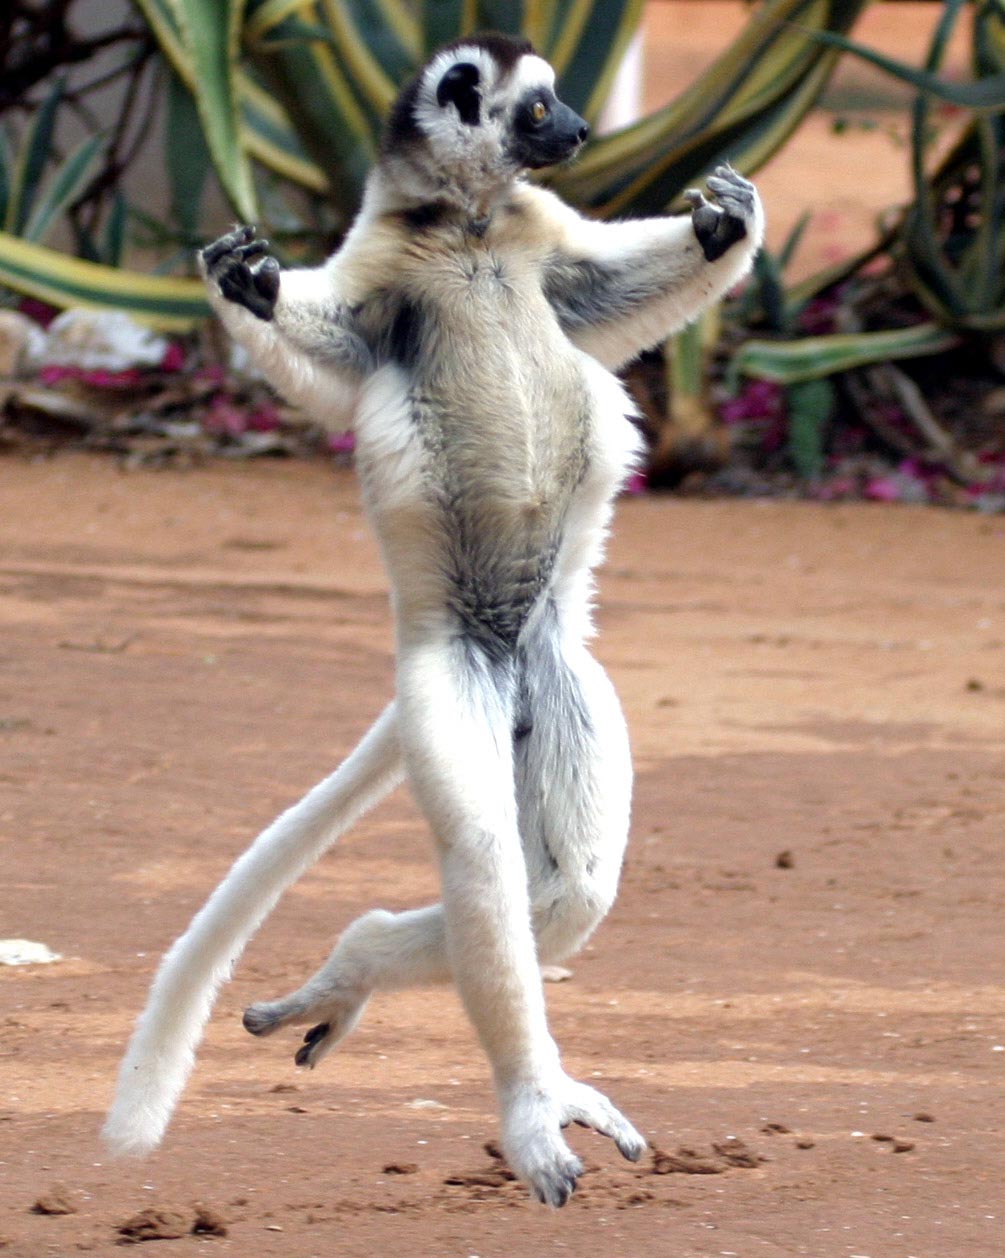 The Lemurs of Madagascar